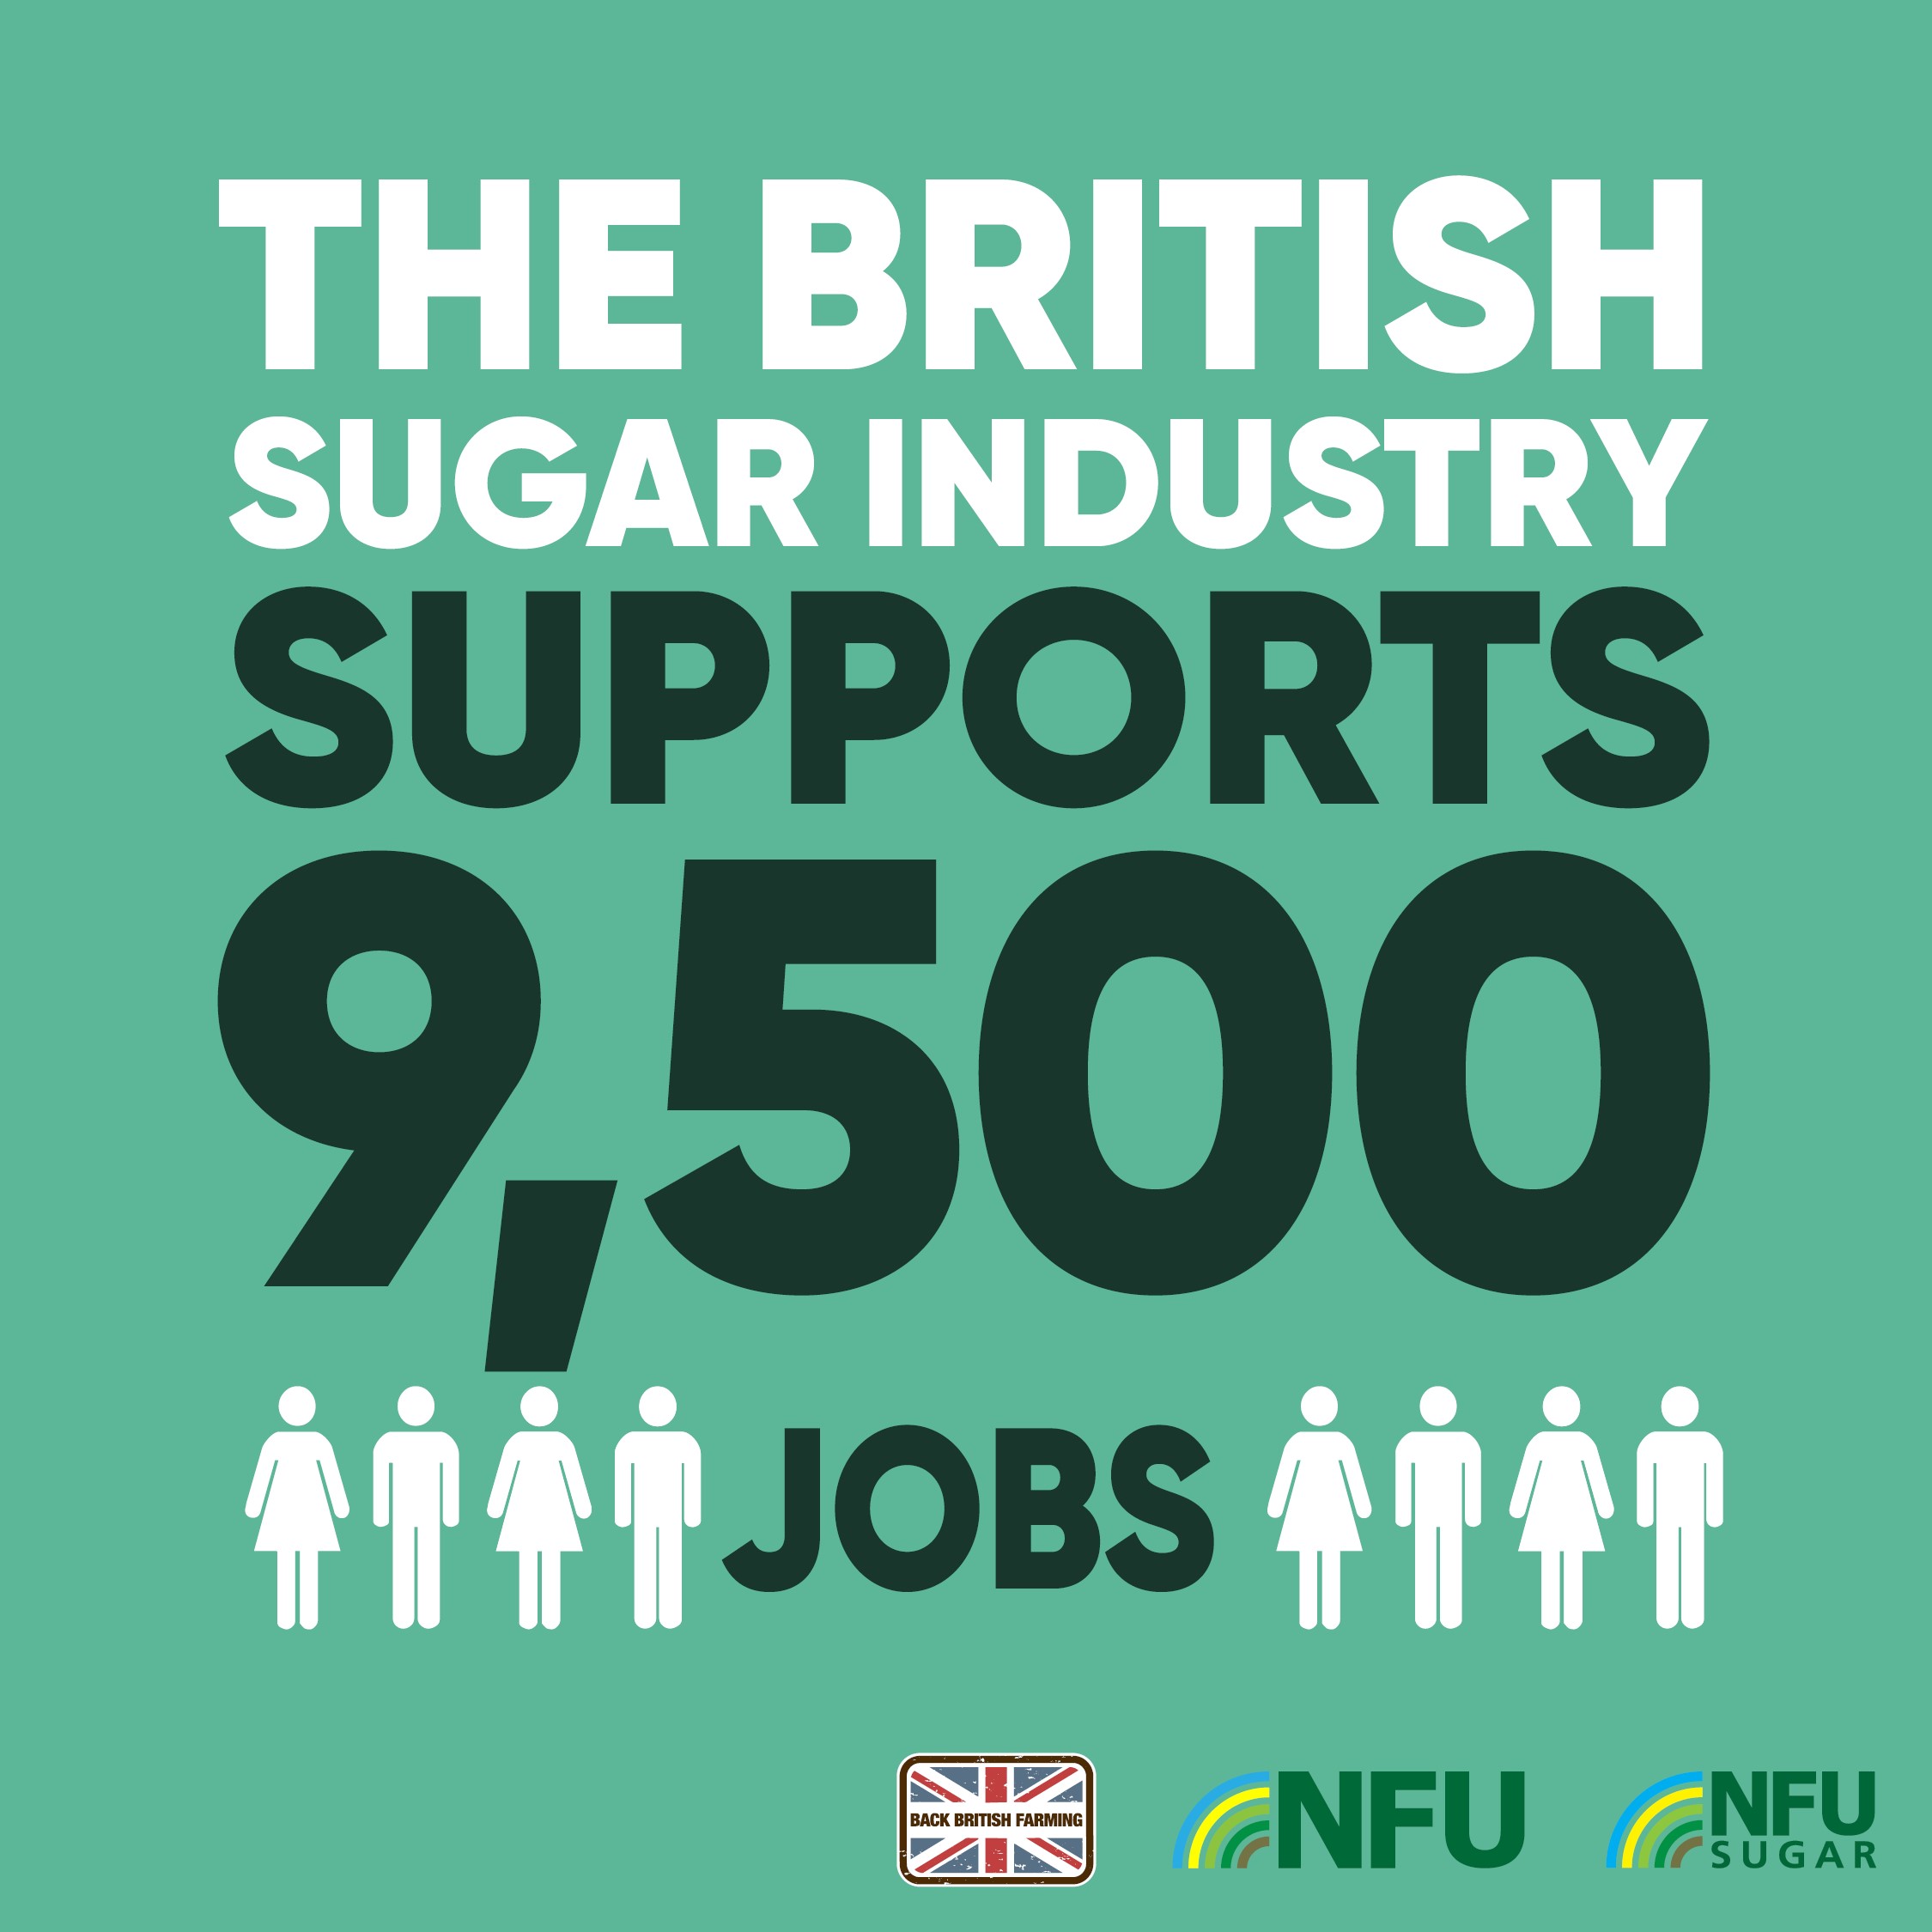 Nfu Sugar infographic instagram 9500 jobs